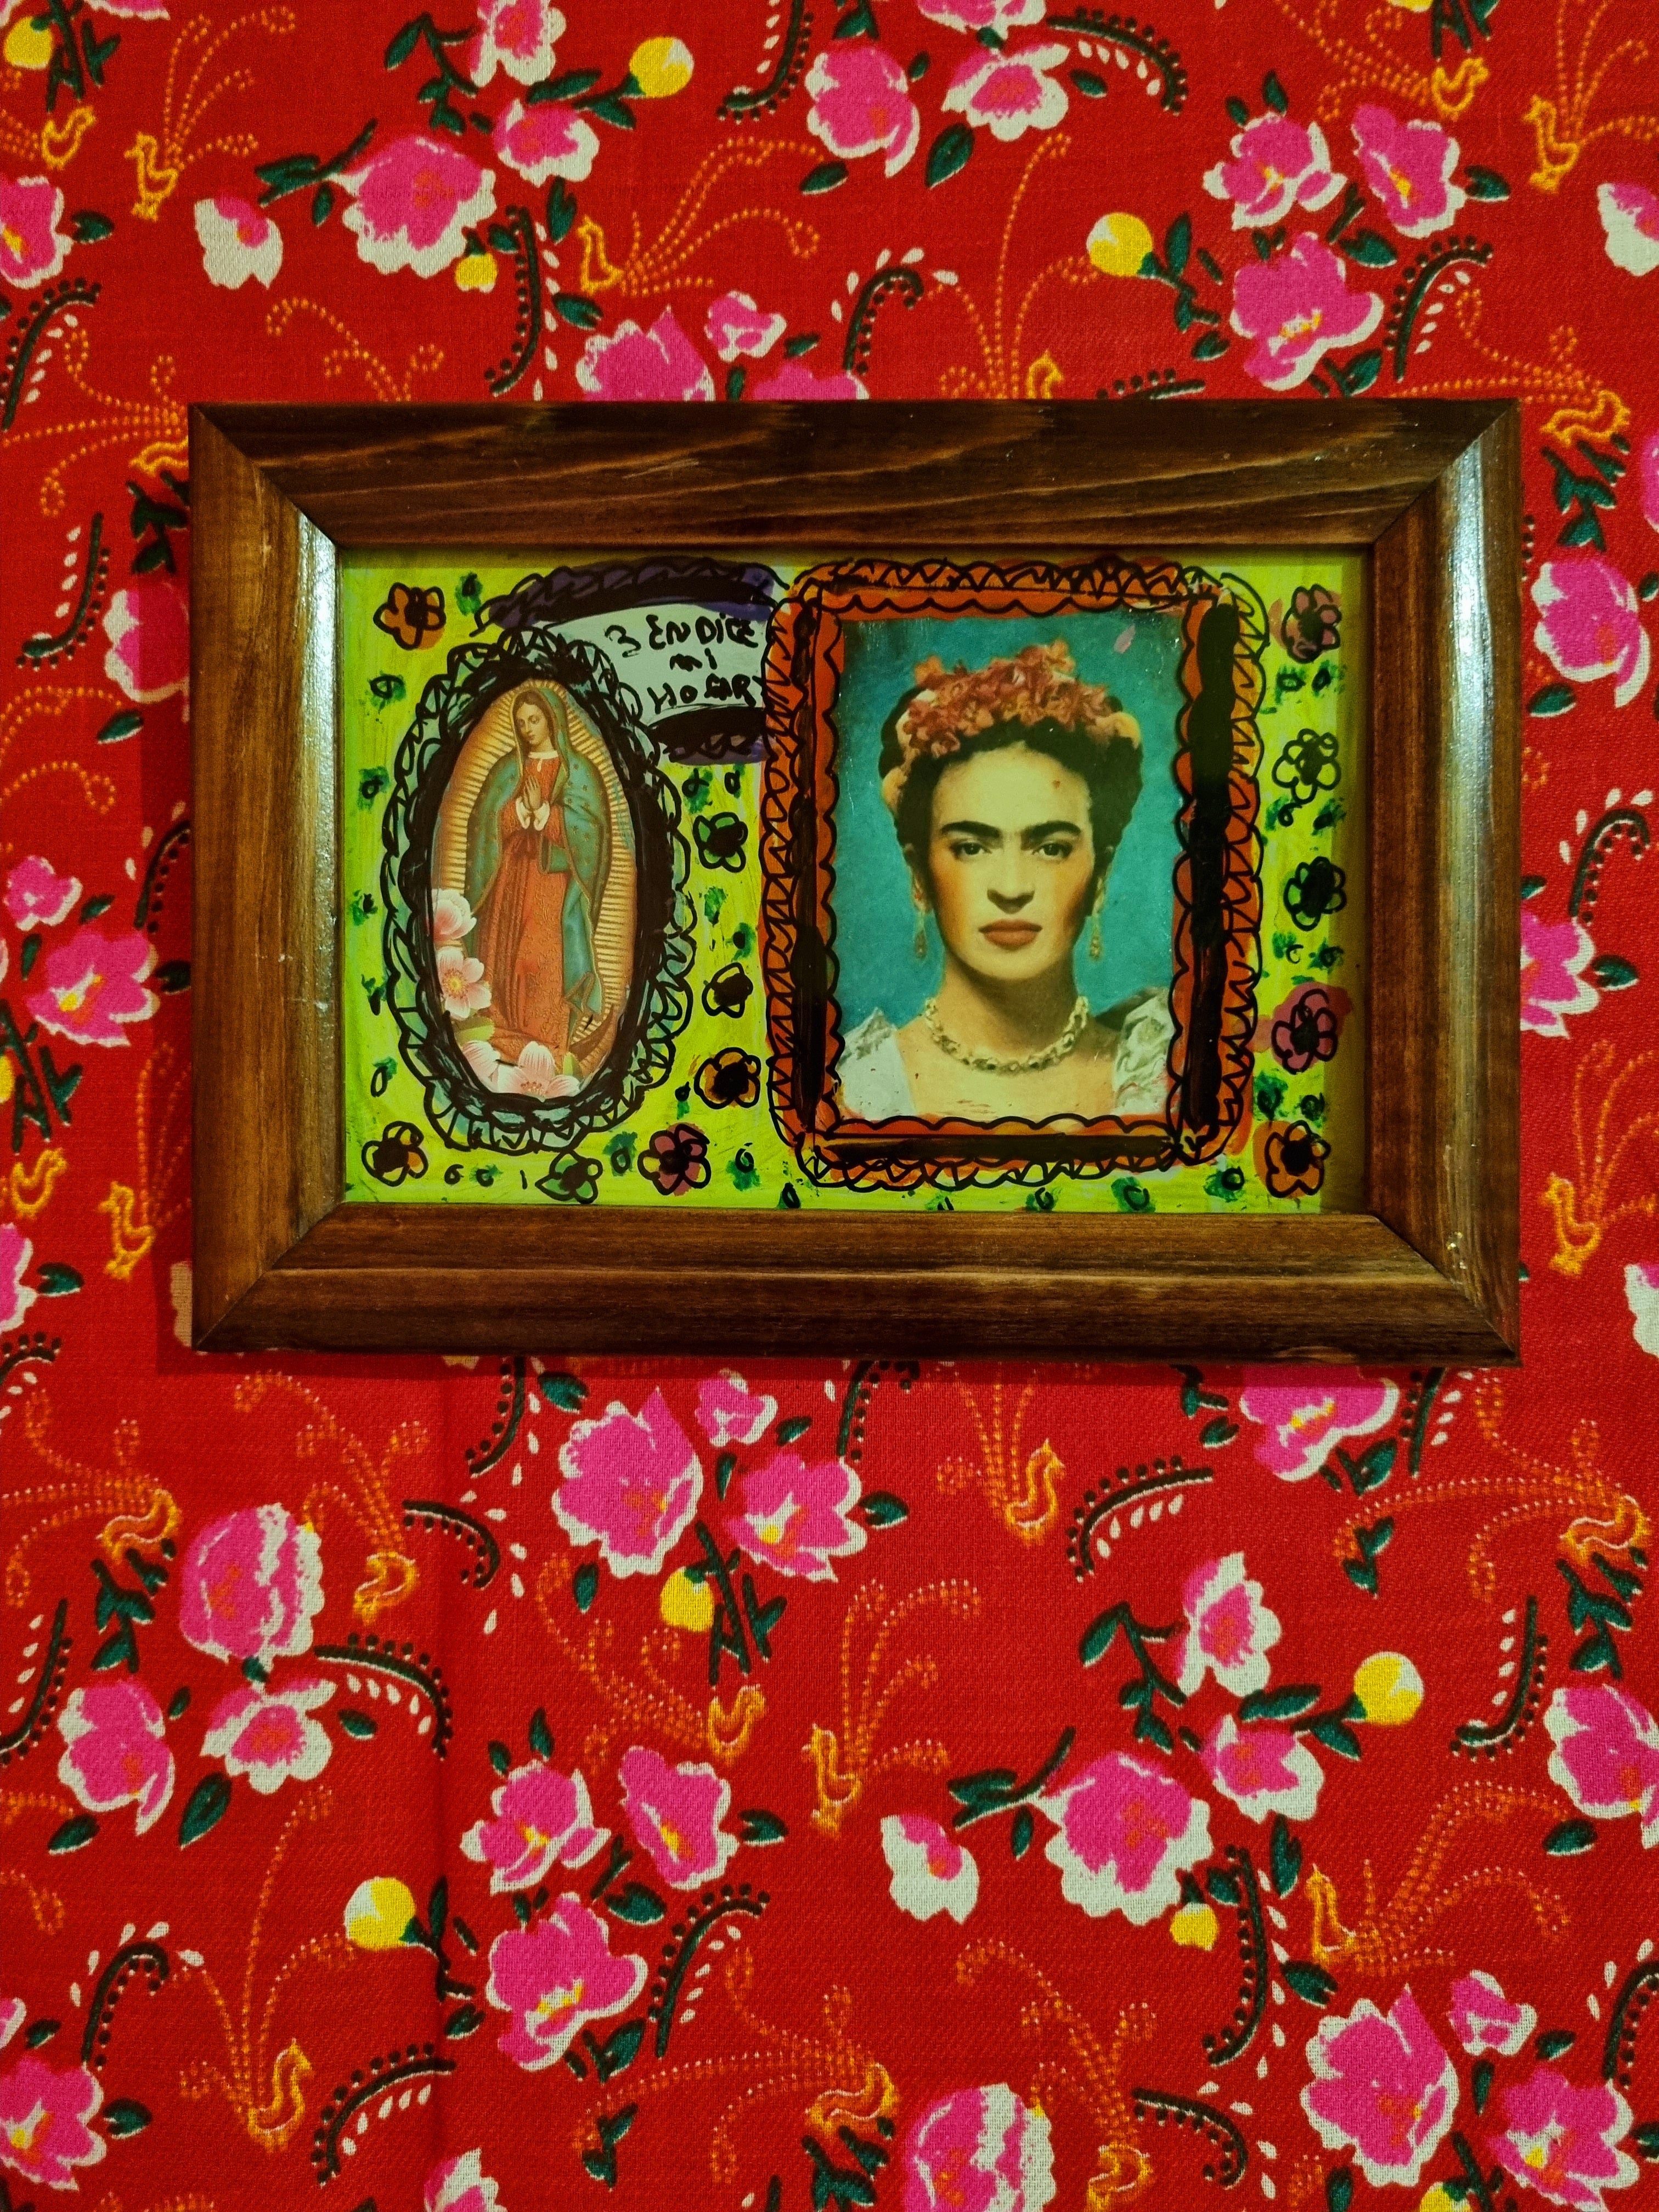 Original Frida Kahlo reverse glass paintings by Manuel Bauman